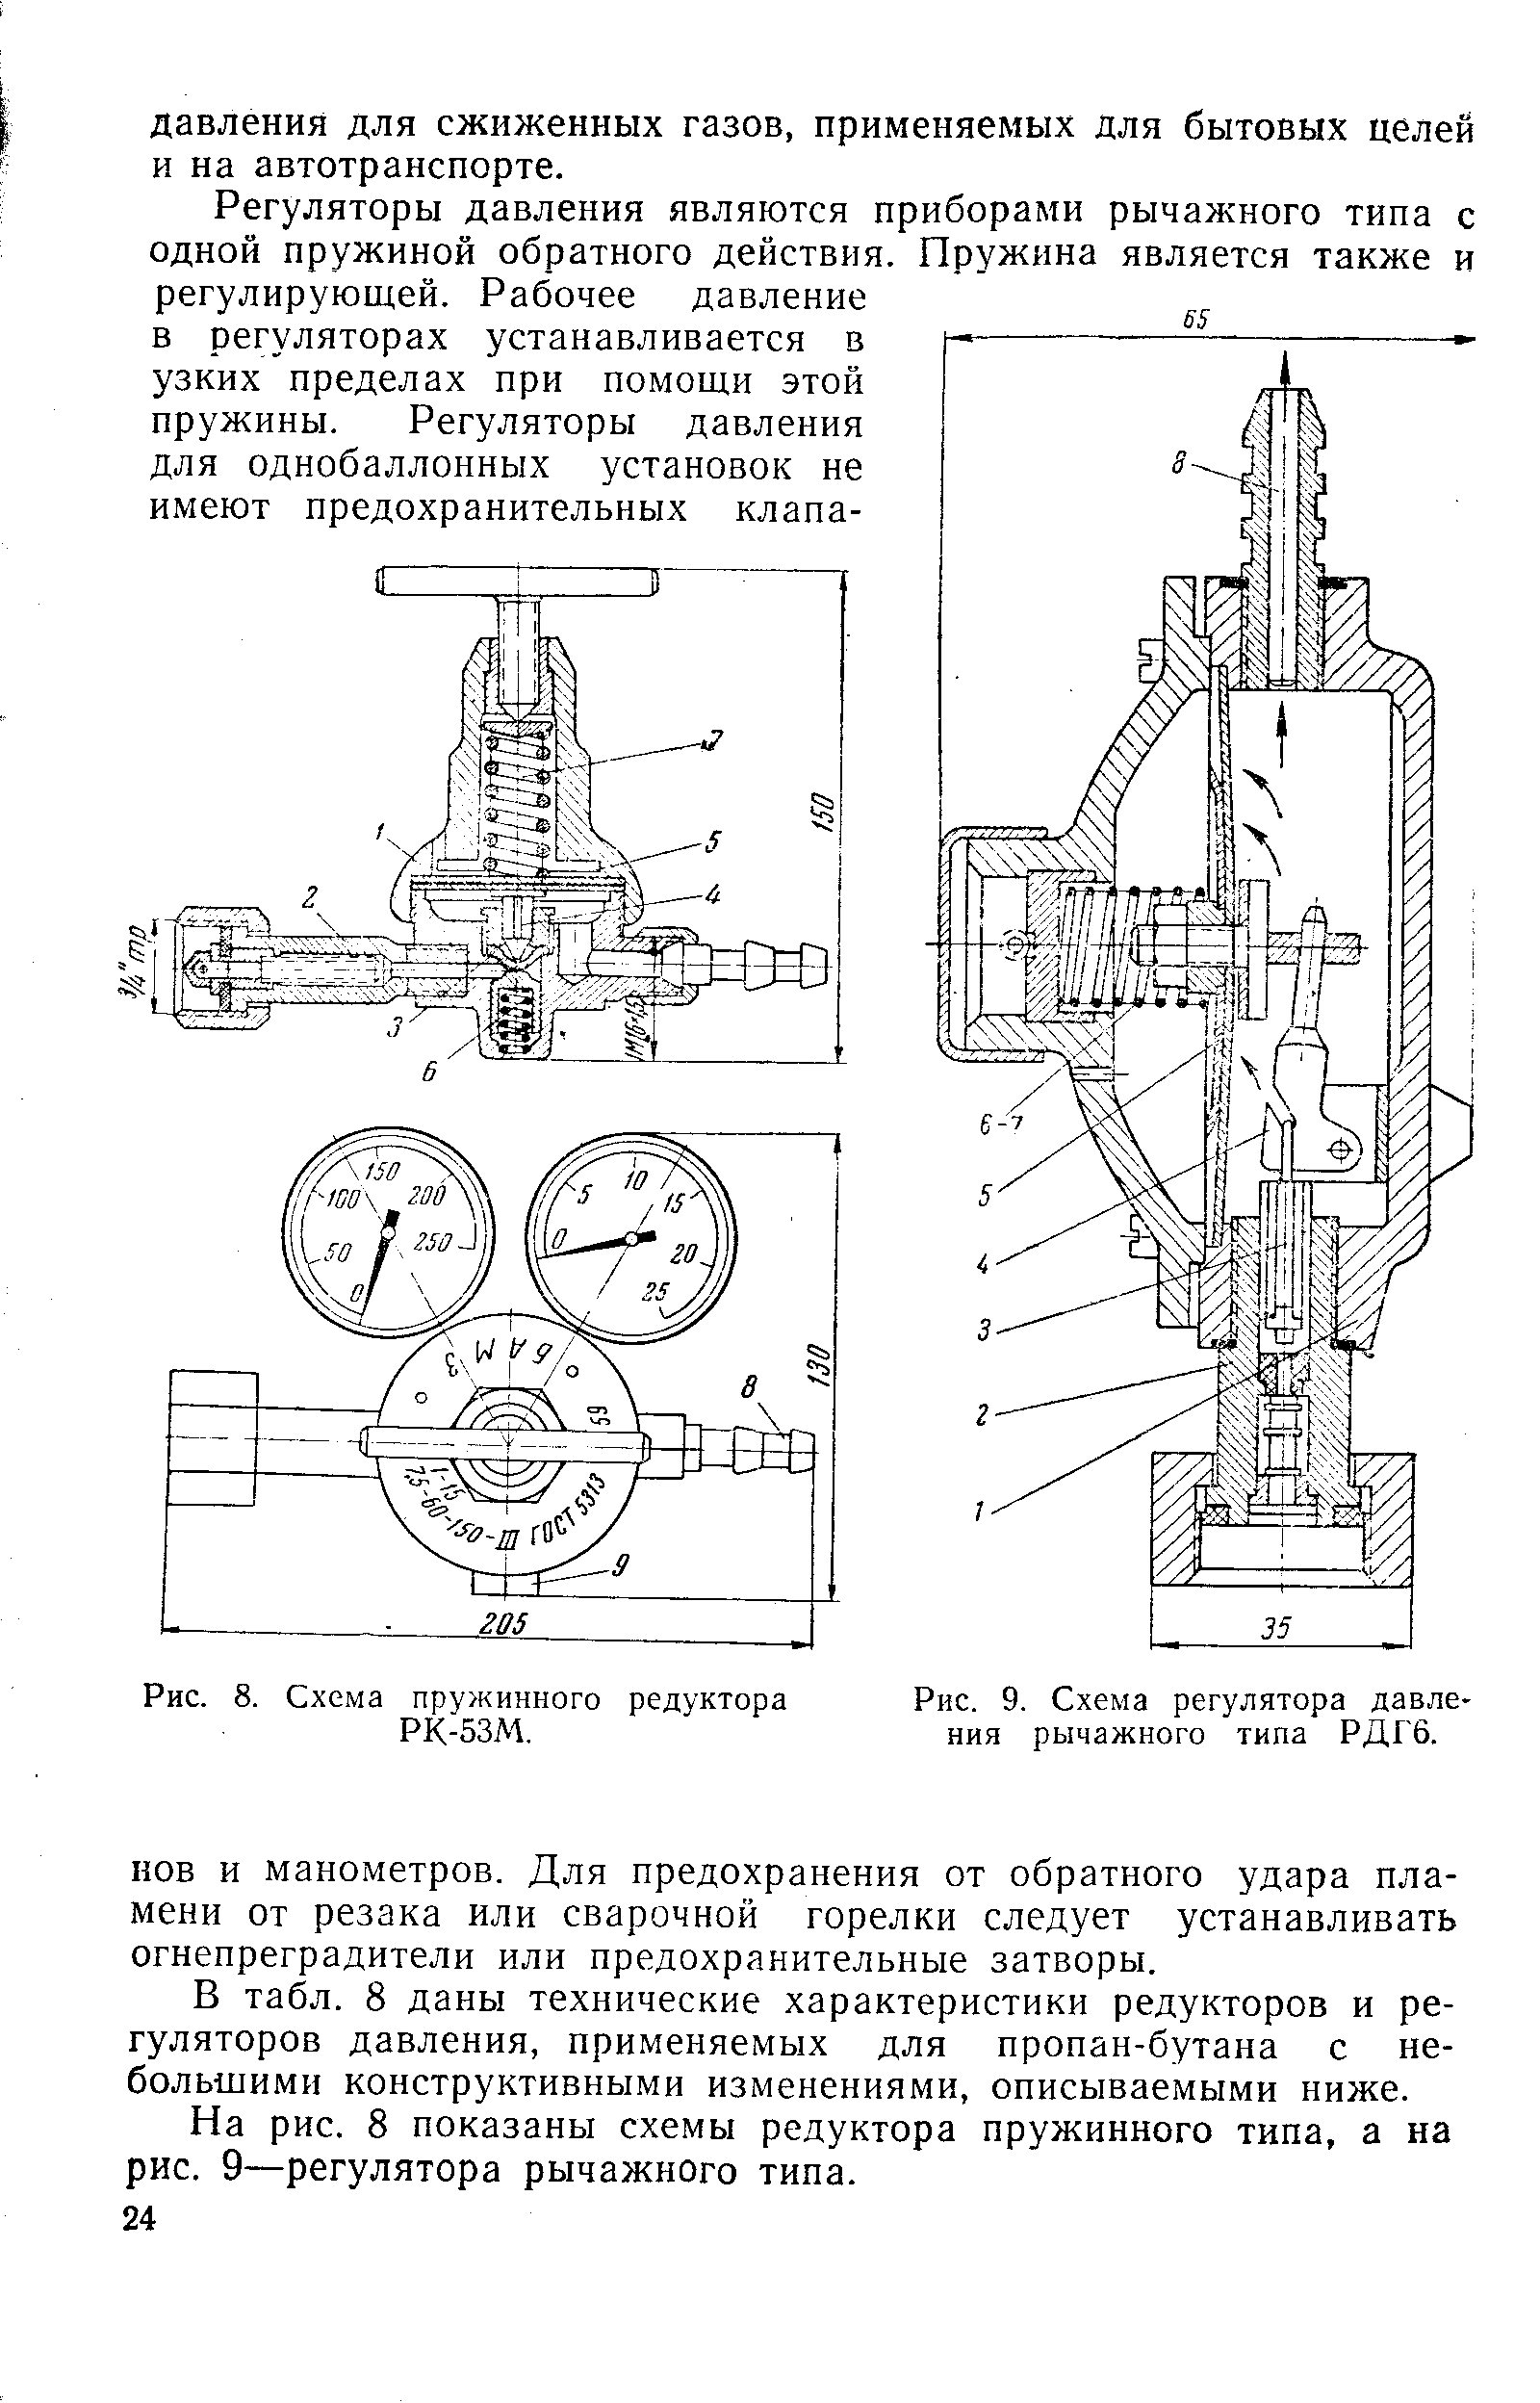 Рис. 8. Схема пружинного редуктора РК-53М.
